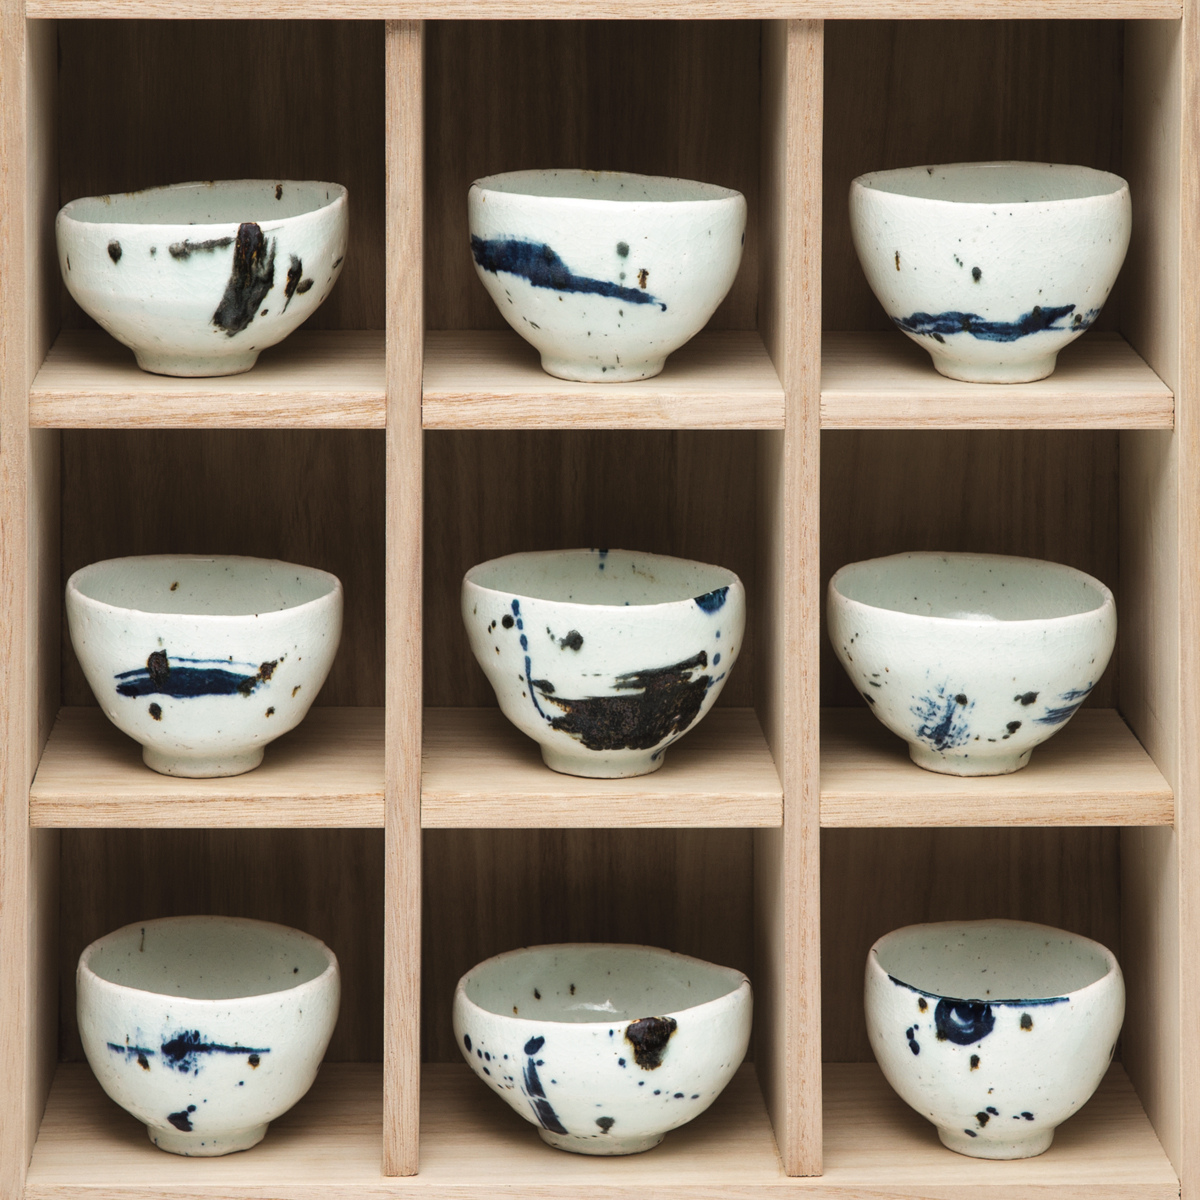 Kang Hyo Lee Ceramics Exhibition 2017 Tea Bowls Set Events | Kang-hyo Lee Major Ceramics Exhibition | 30/9/17